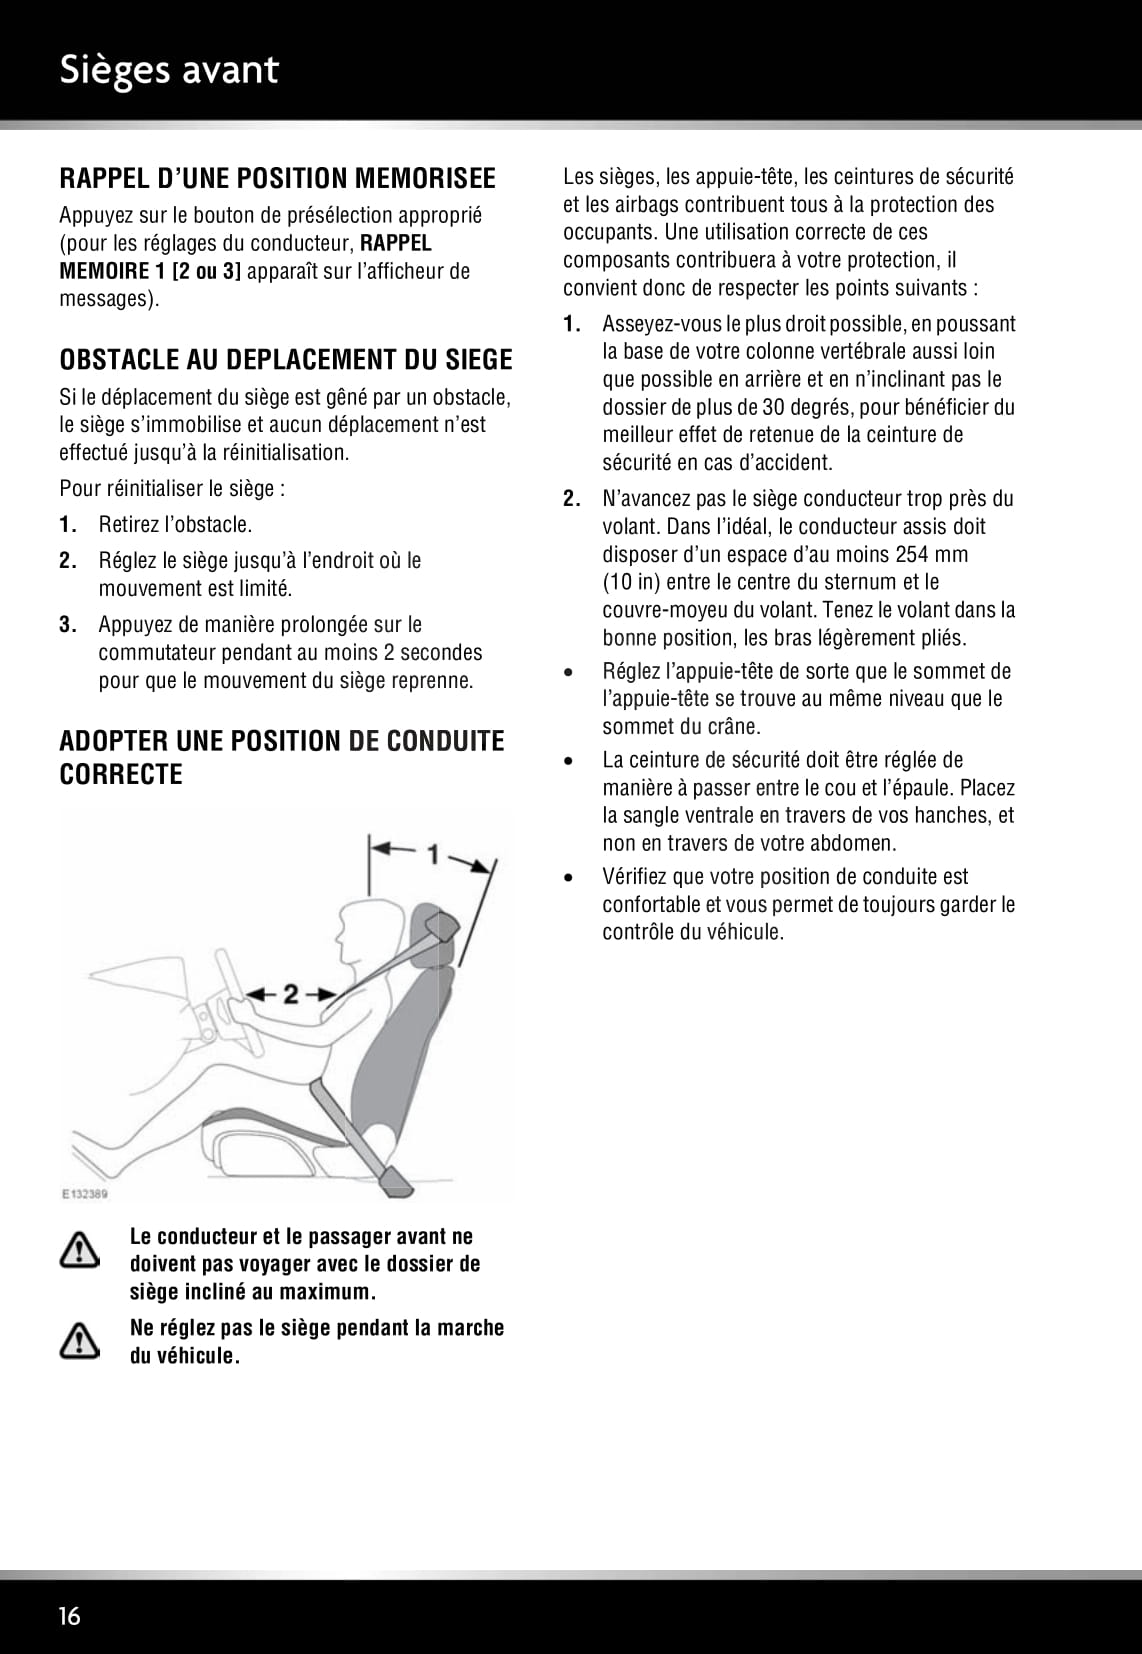 2011-2012 Jaguar XJ Owner's Manual | French